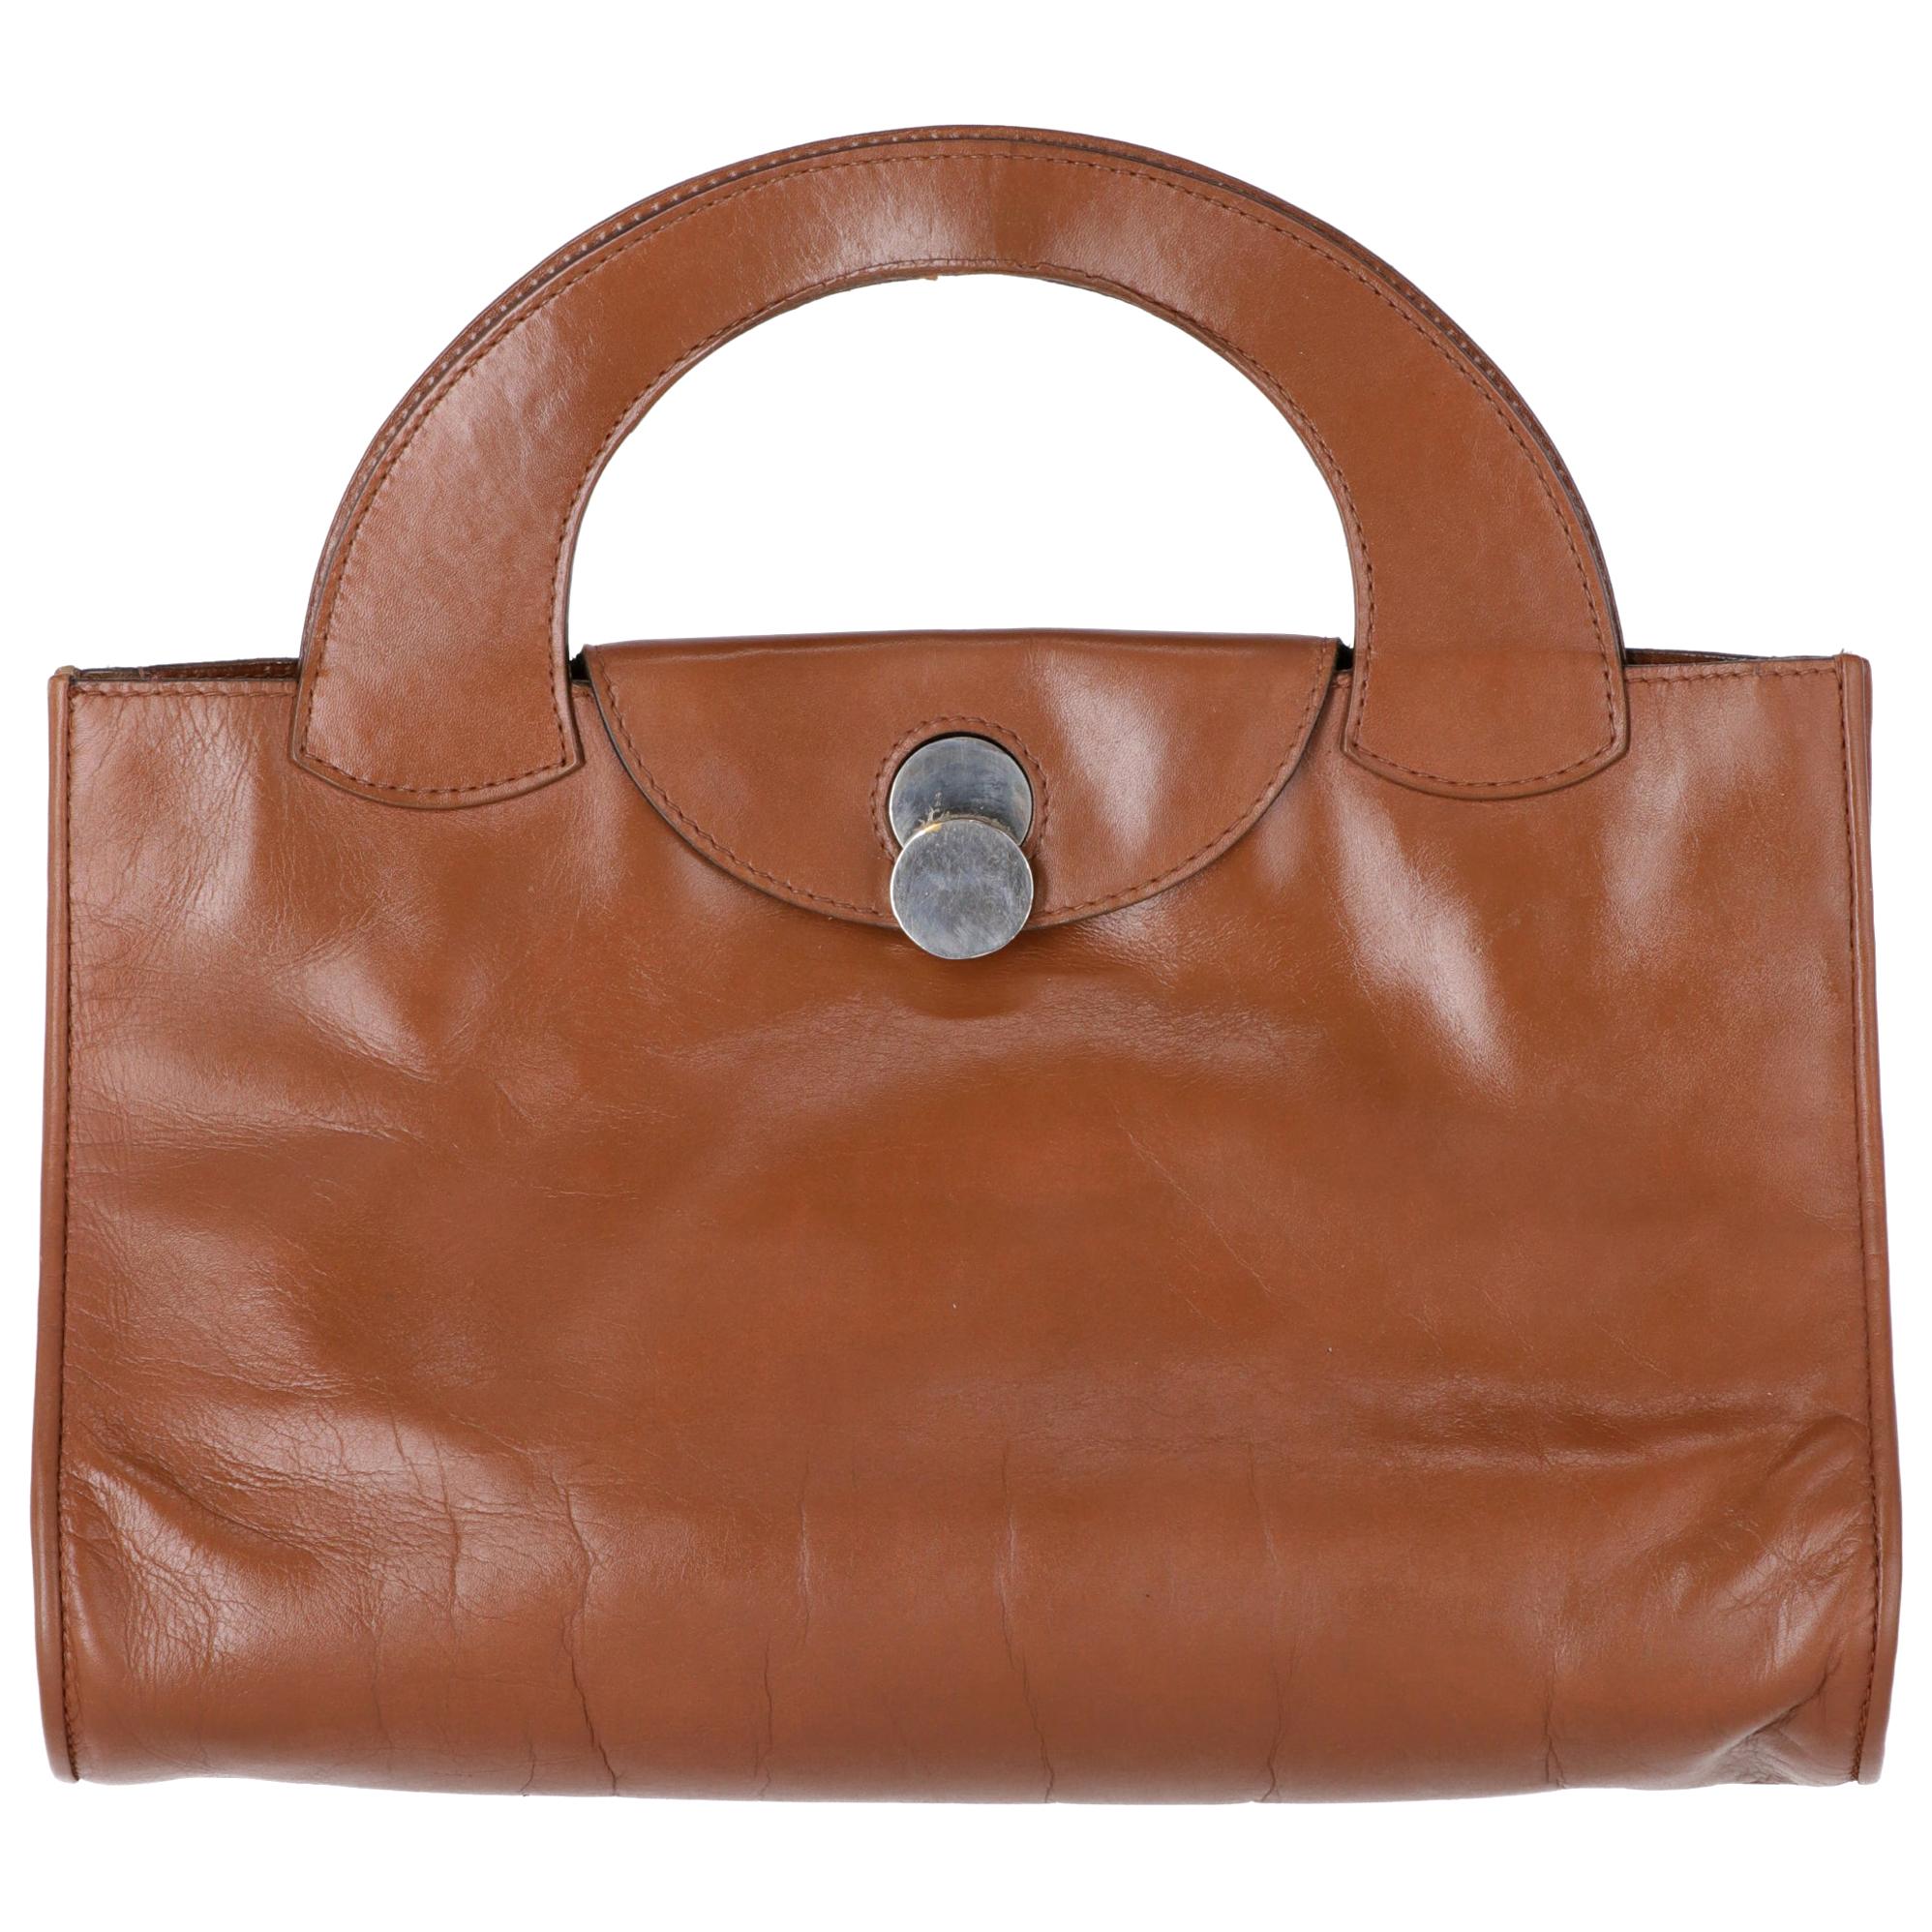 1970s Gherardini Brown Leather Bag